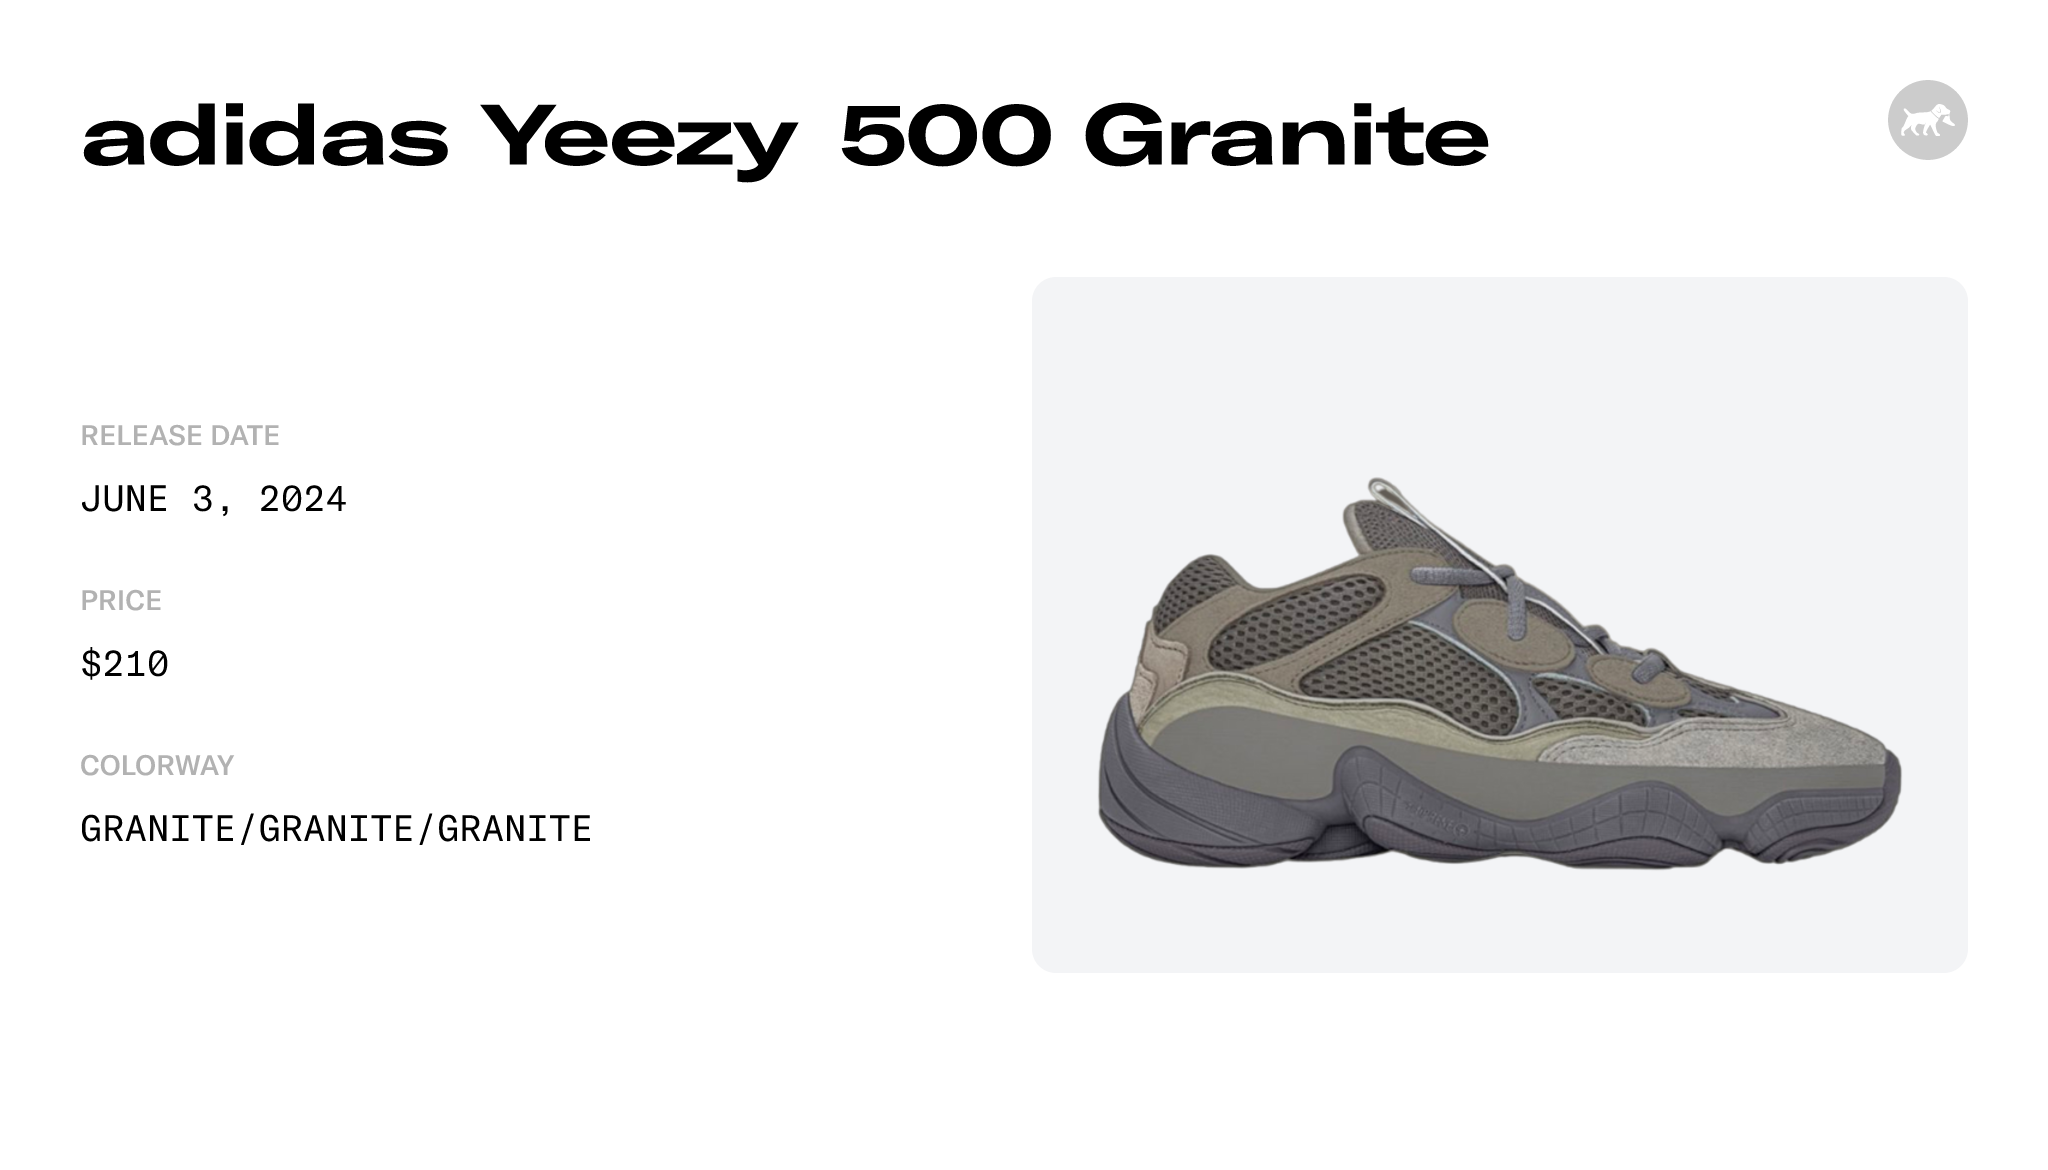 adidas Yeezy 500 Granite - GW6373 Raffles and Release Date